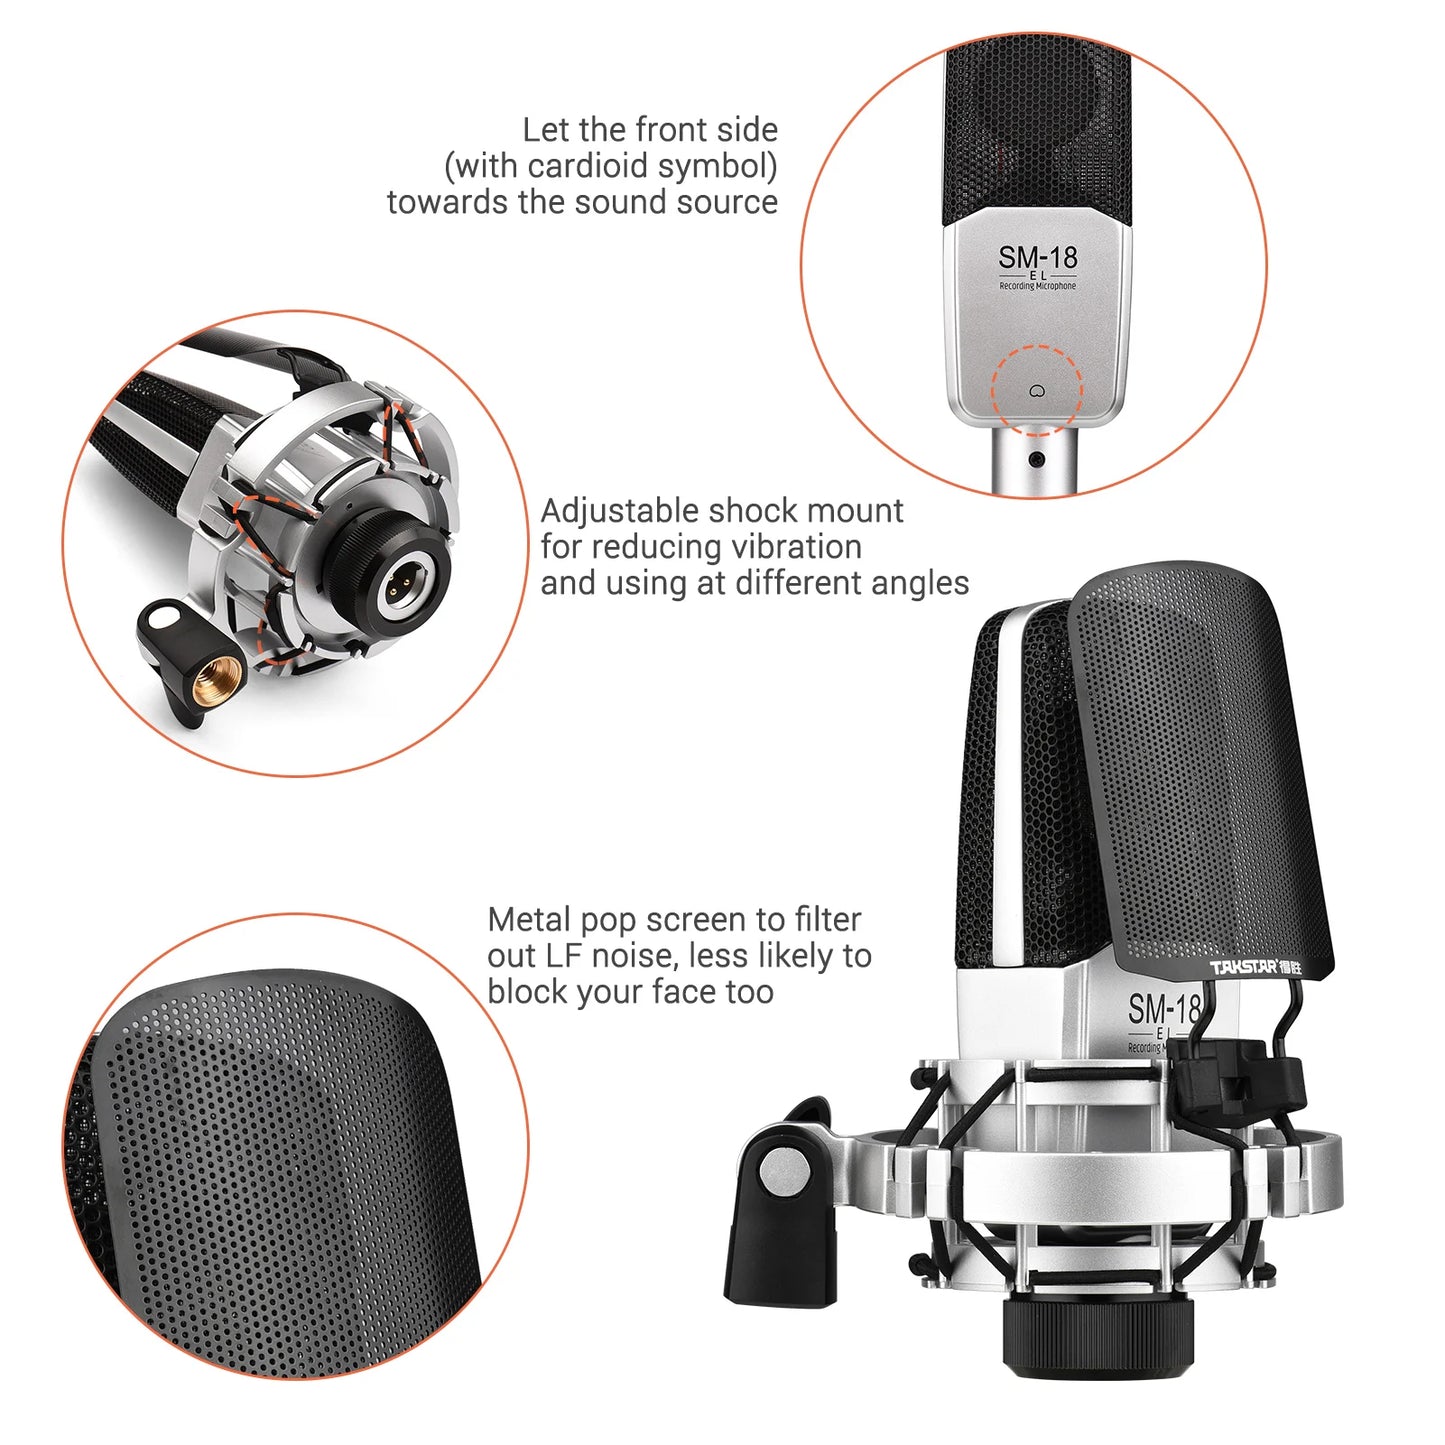 TAKSTAR SM-18 EL Professional Recording Microphone Cardioid Condenser